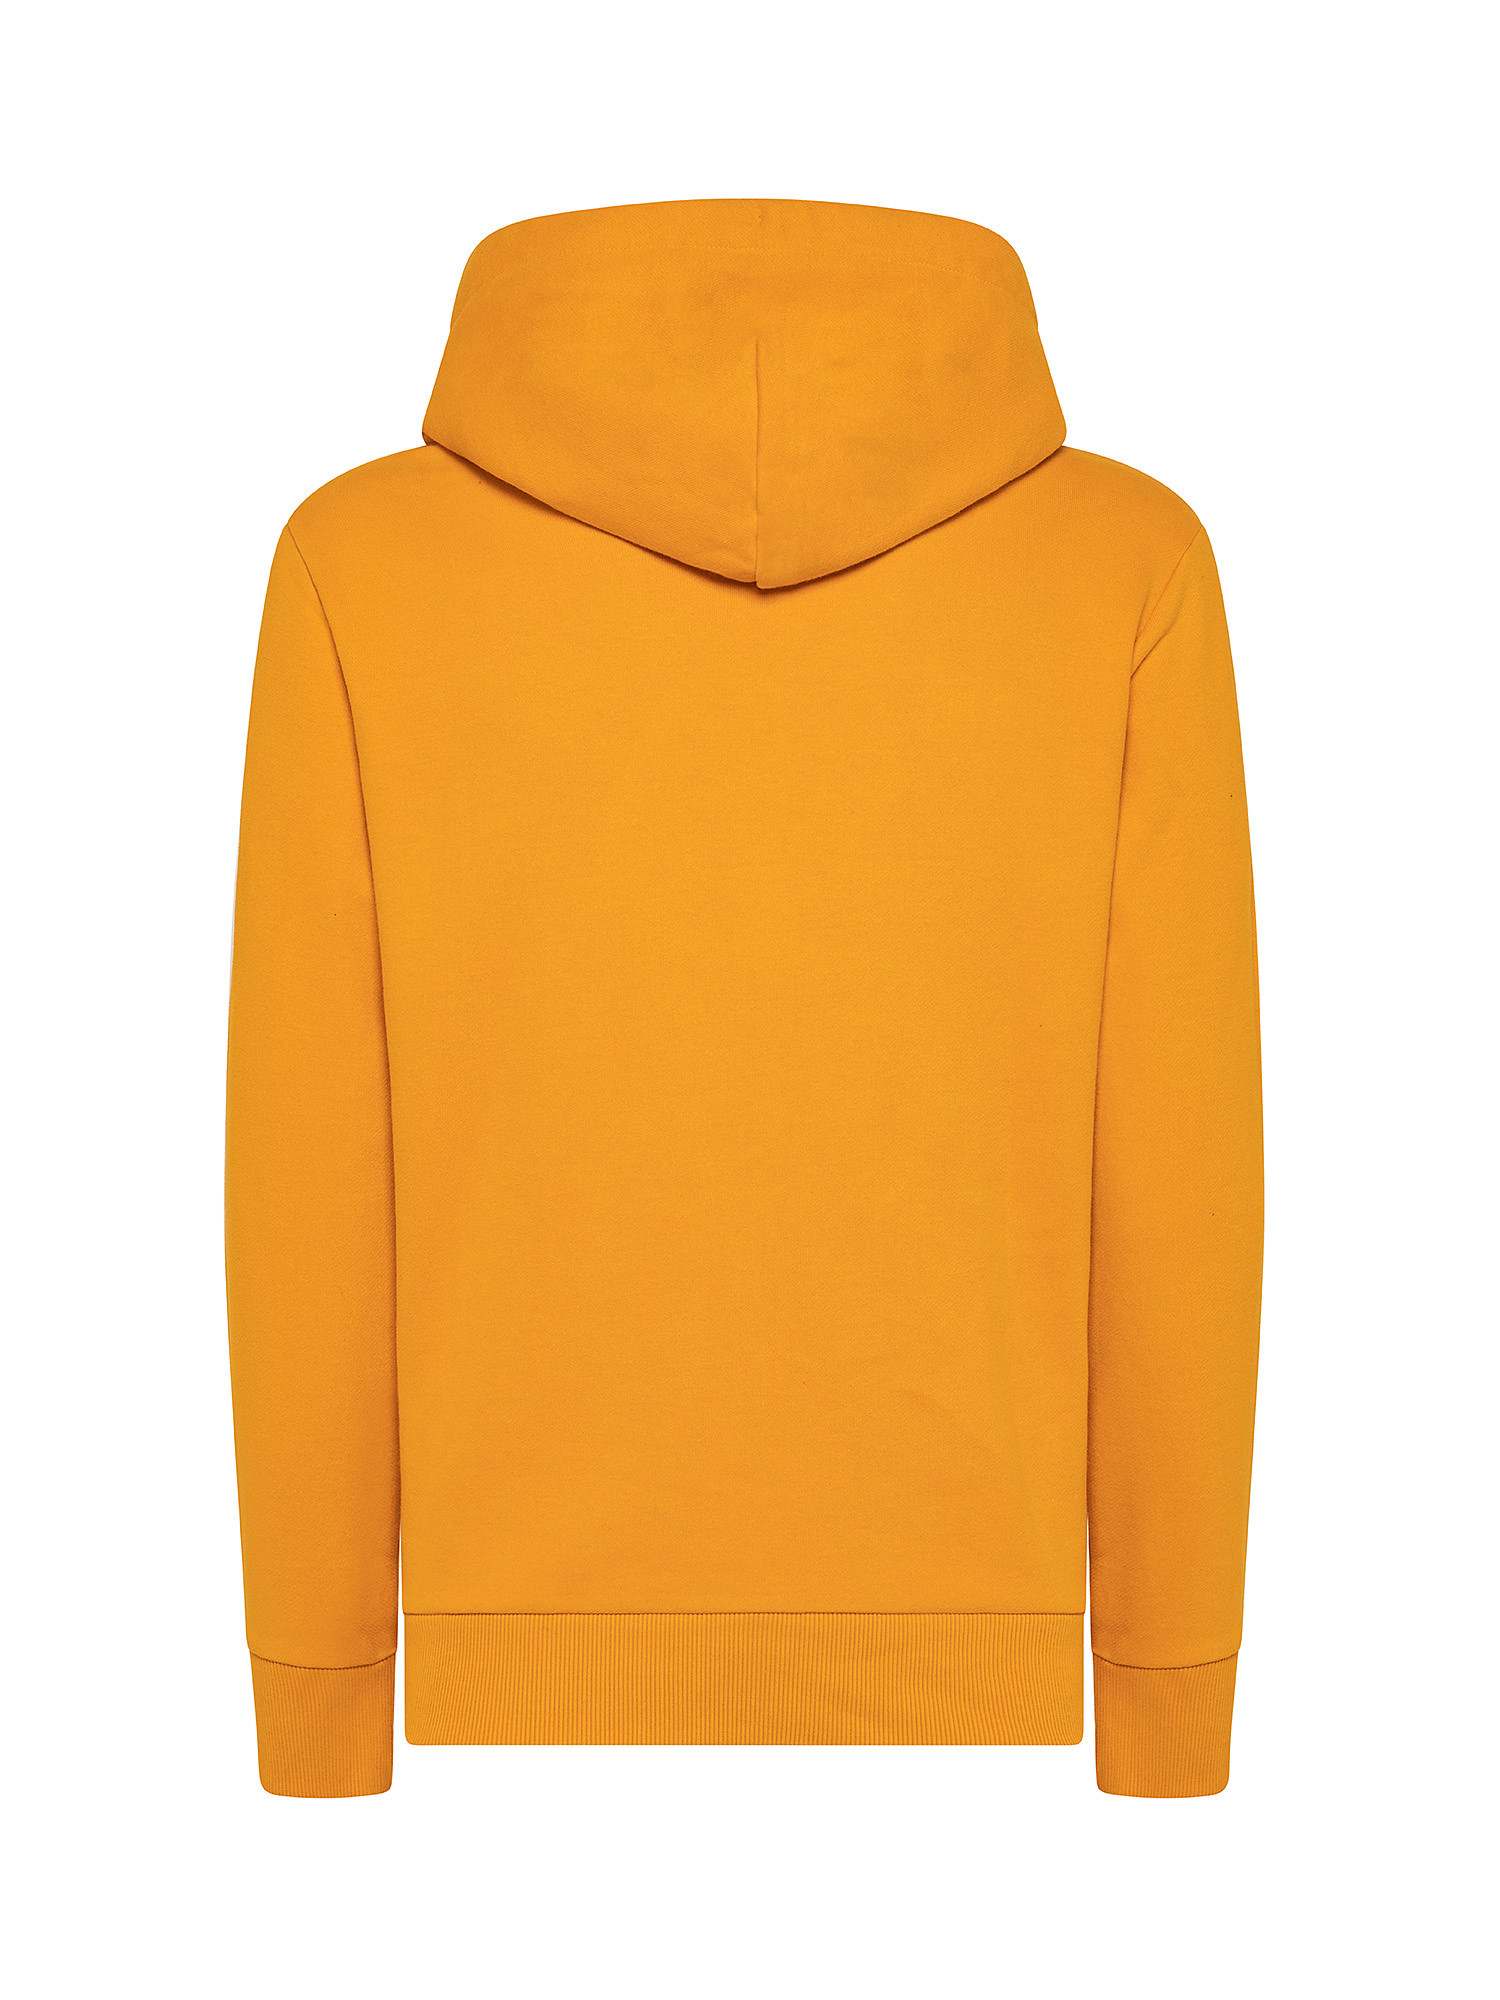 Hooded sweatshirt with print, Orange, large image number 1